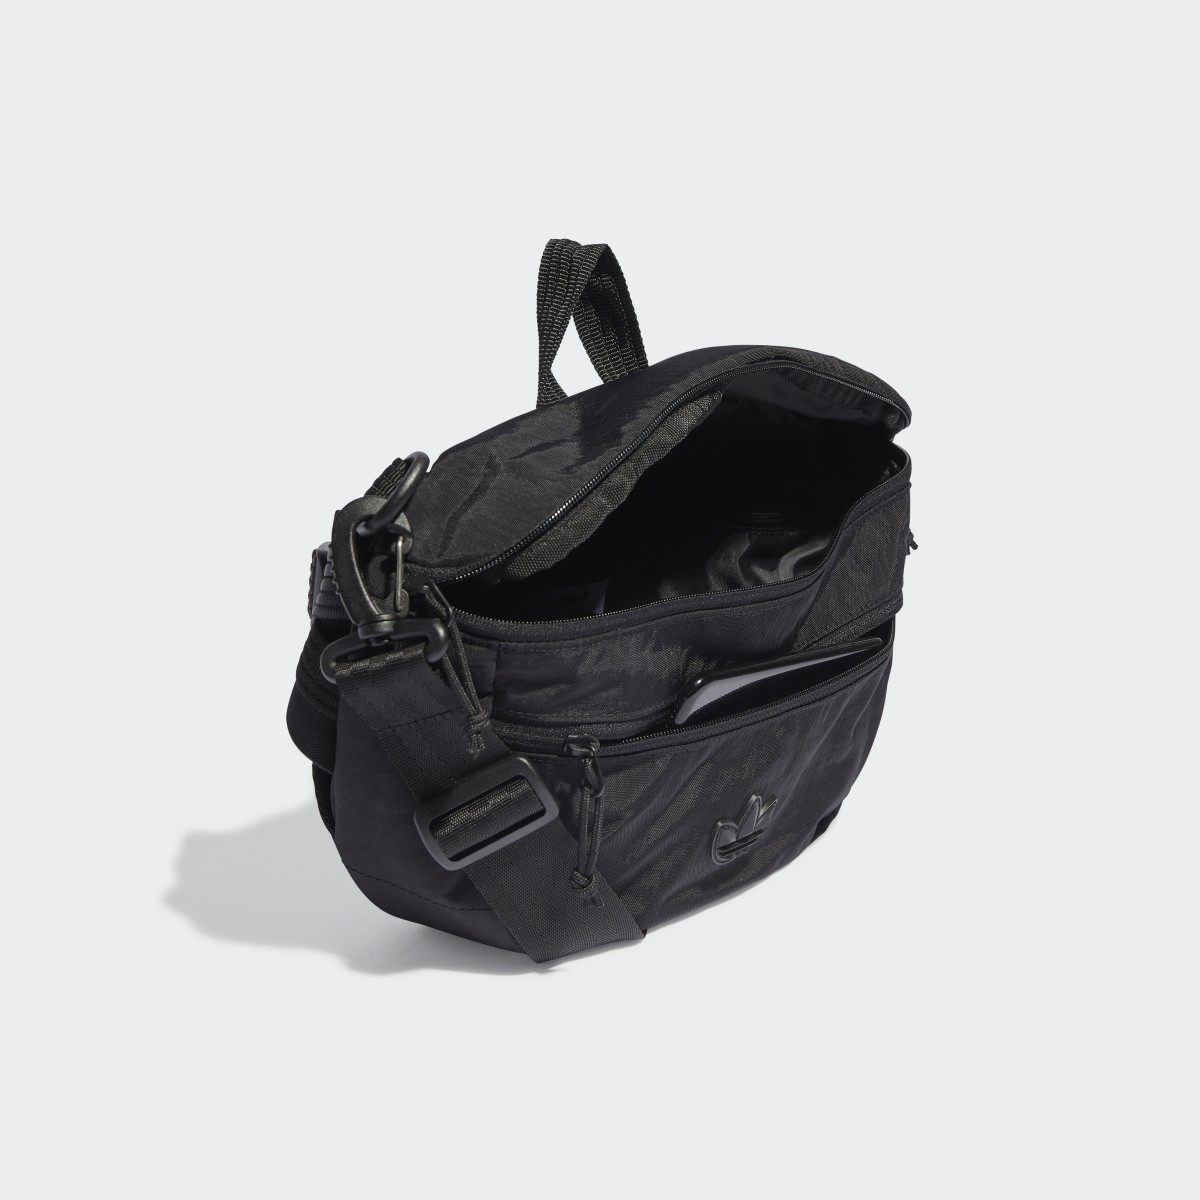 Adidas Adventure Waist Bag. 5